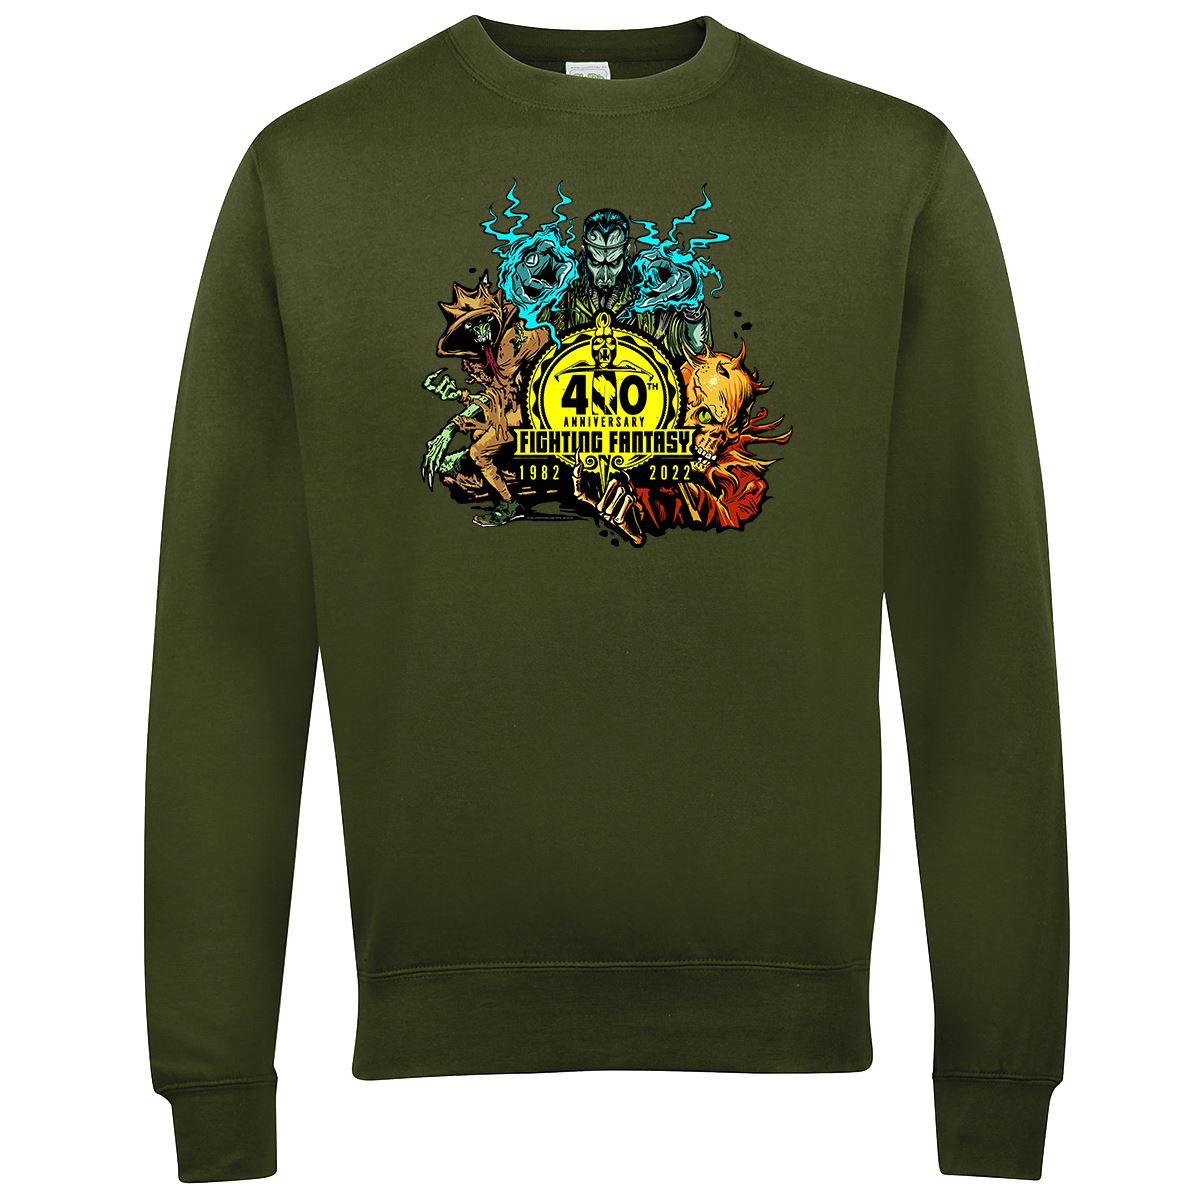 Fighting Fantasy 40th Anniversary Retro Gaming Sweatshirt Sweatshirt Seven Squared Small Olive Green 